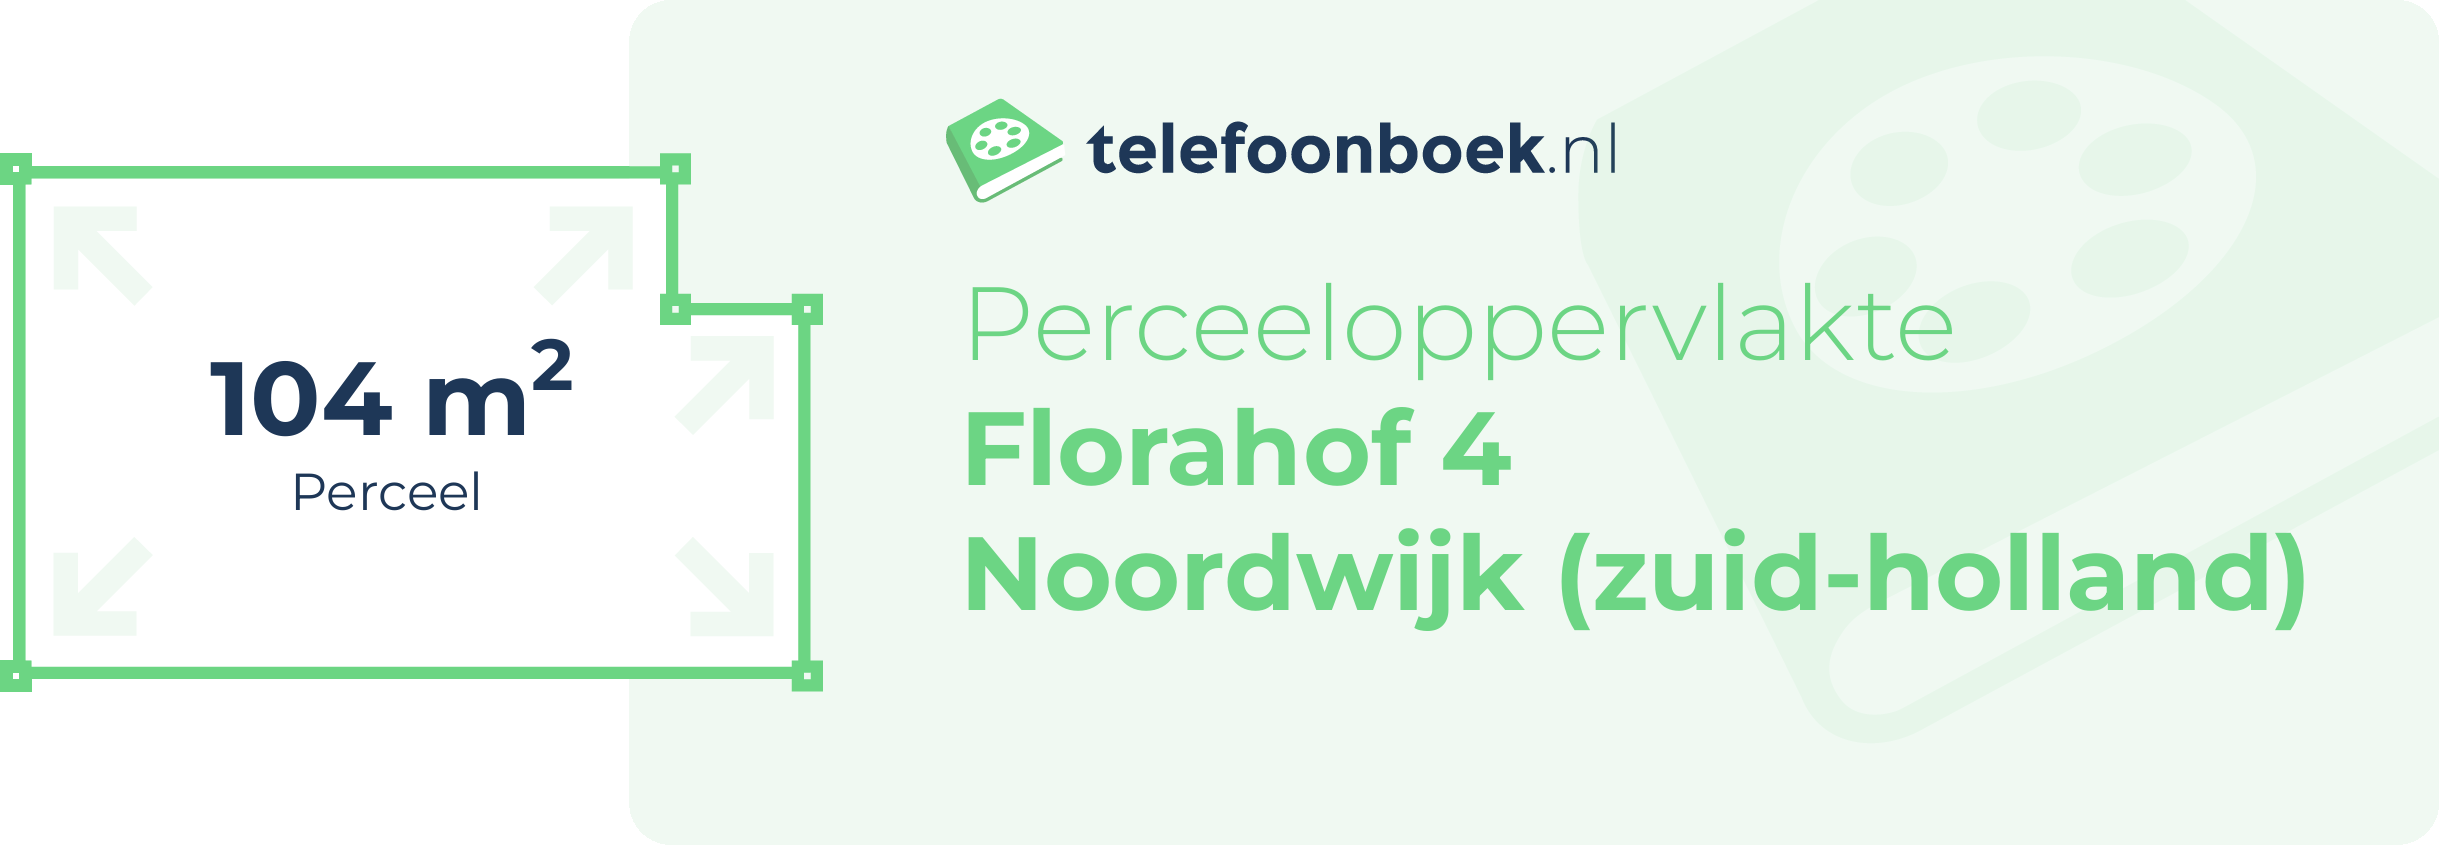 Perceeloppervlakte Florahof 4 Noordwijk (Zuid-Holland)